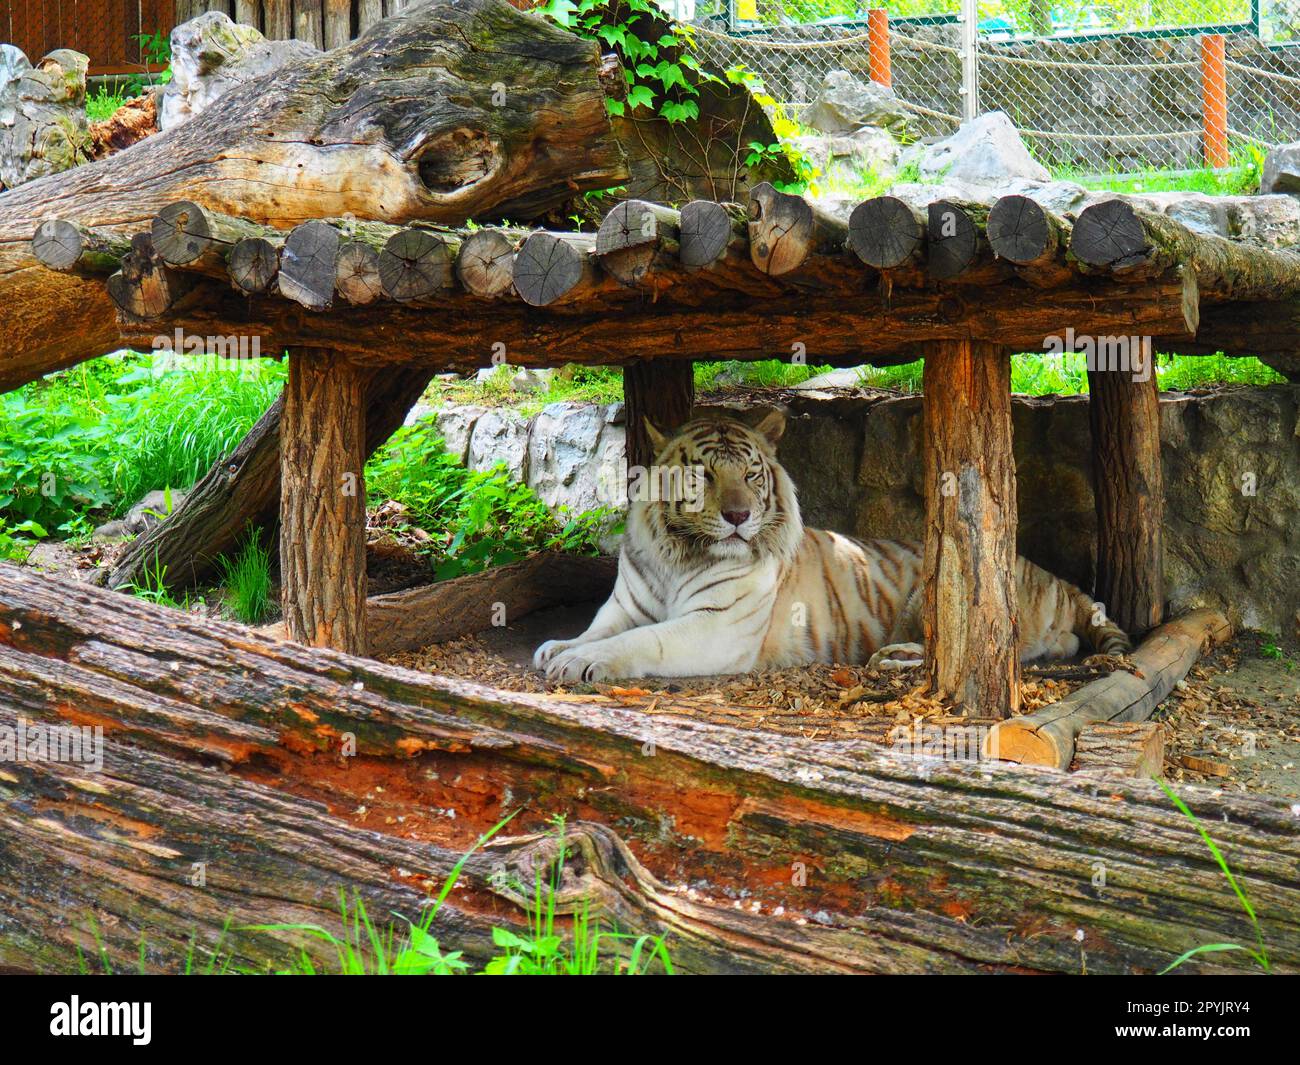 Bengal tiger, Panthera tigris tigris or Panthera tigris bengalensis. Albino mutation - white tiger. The animal is resting. The tiger holds its head proudly. Portrait of a Royal Bengal tiger Stock Photo